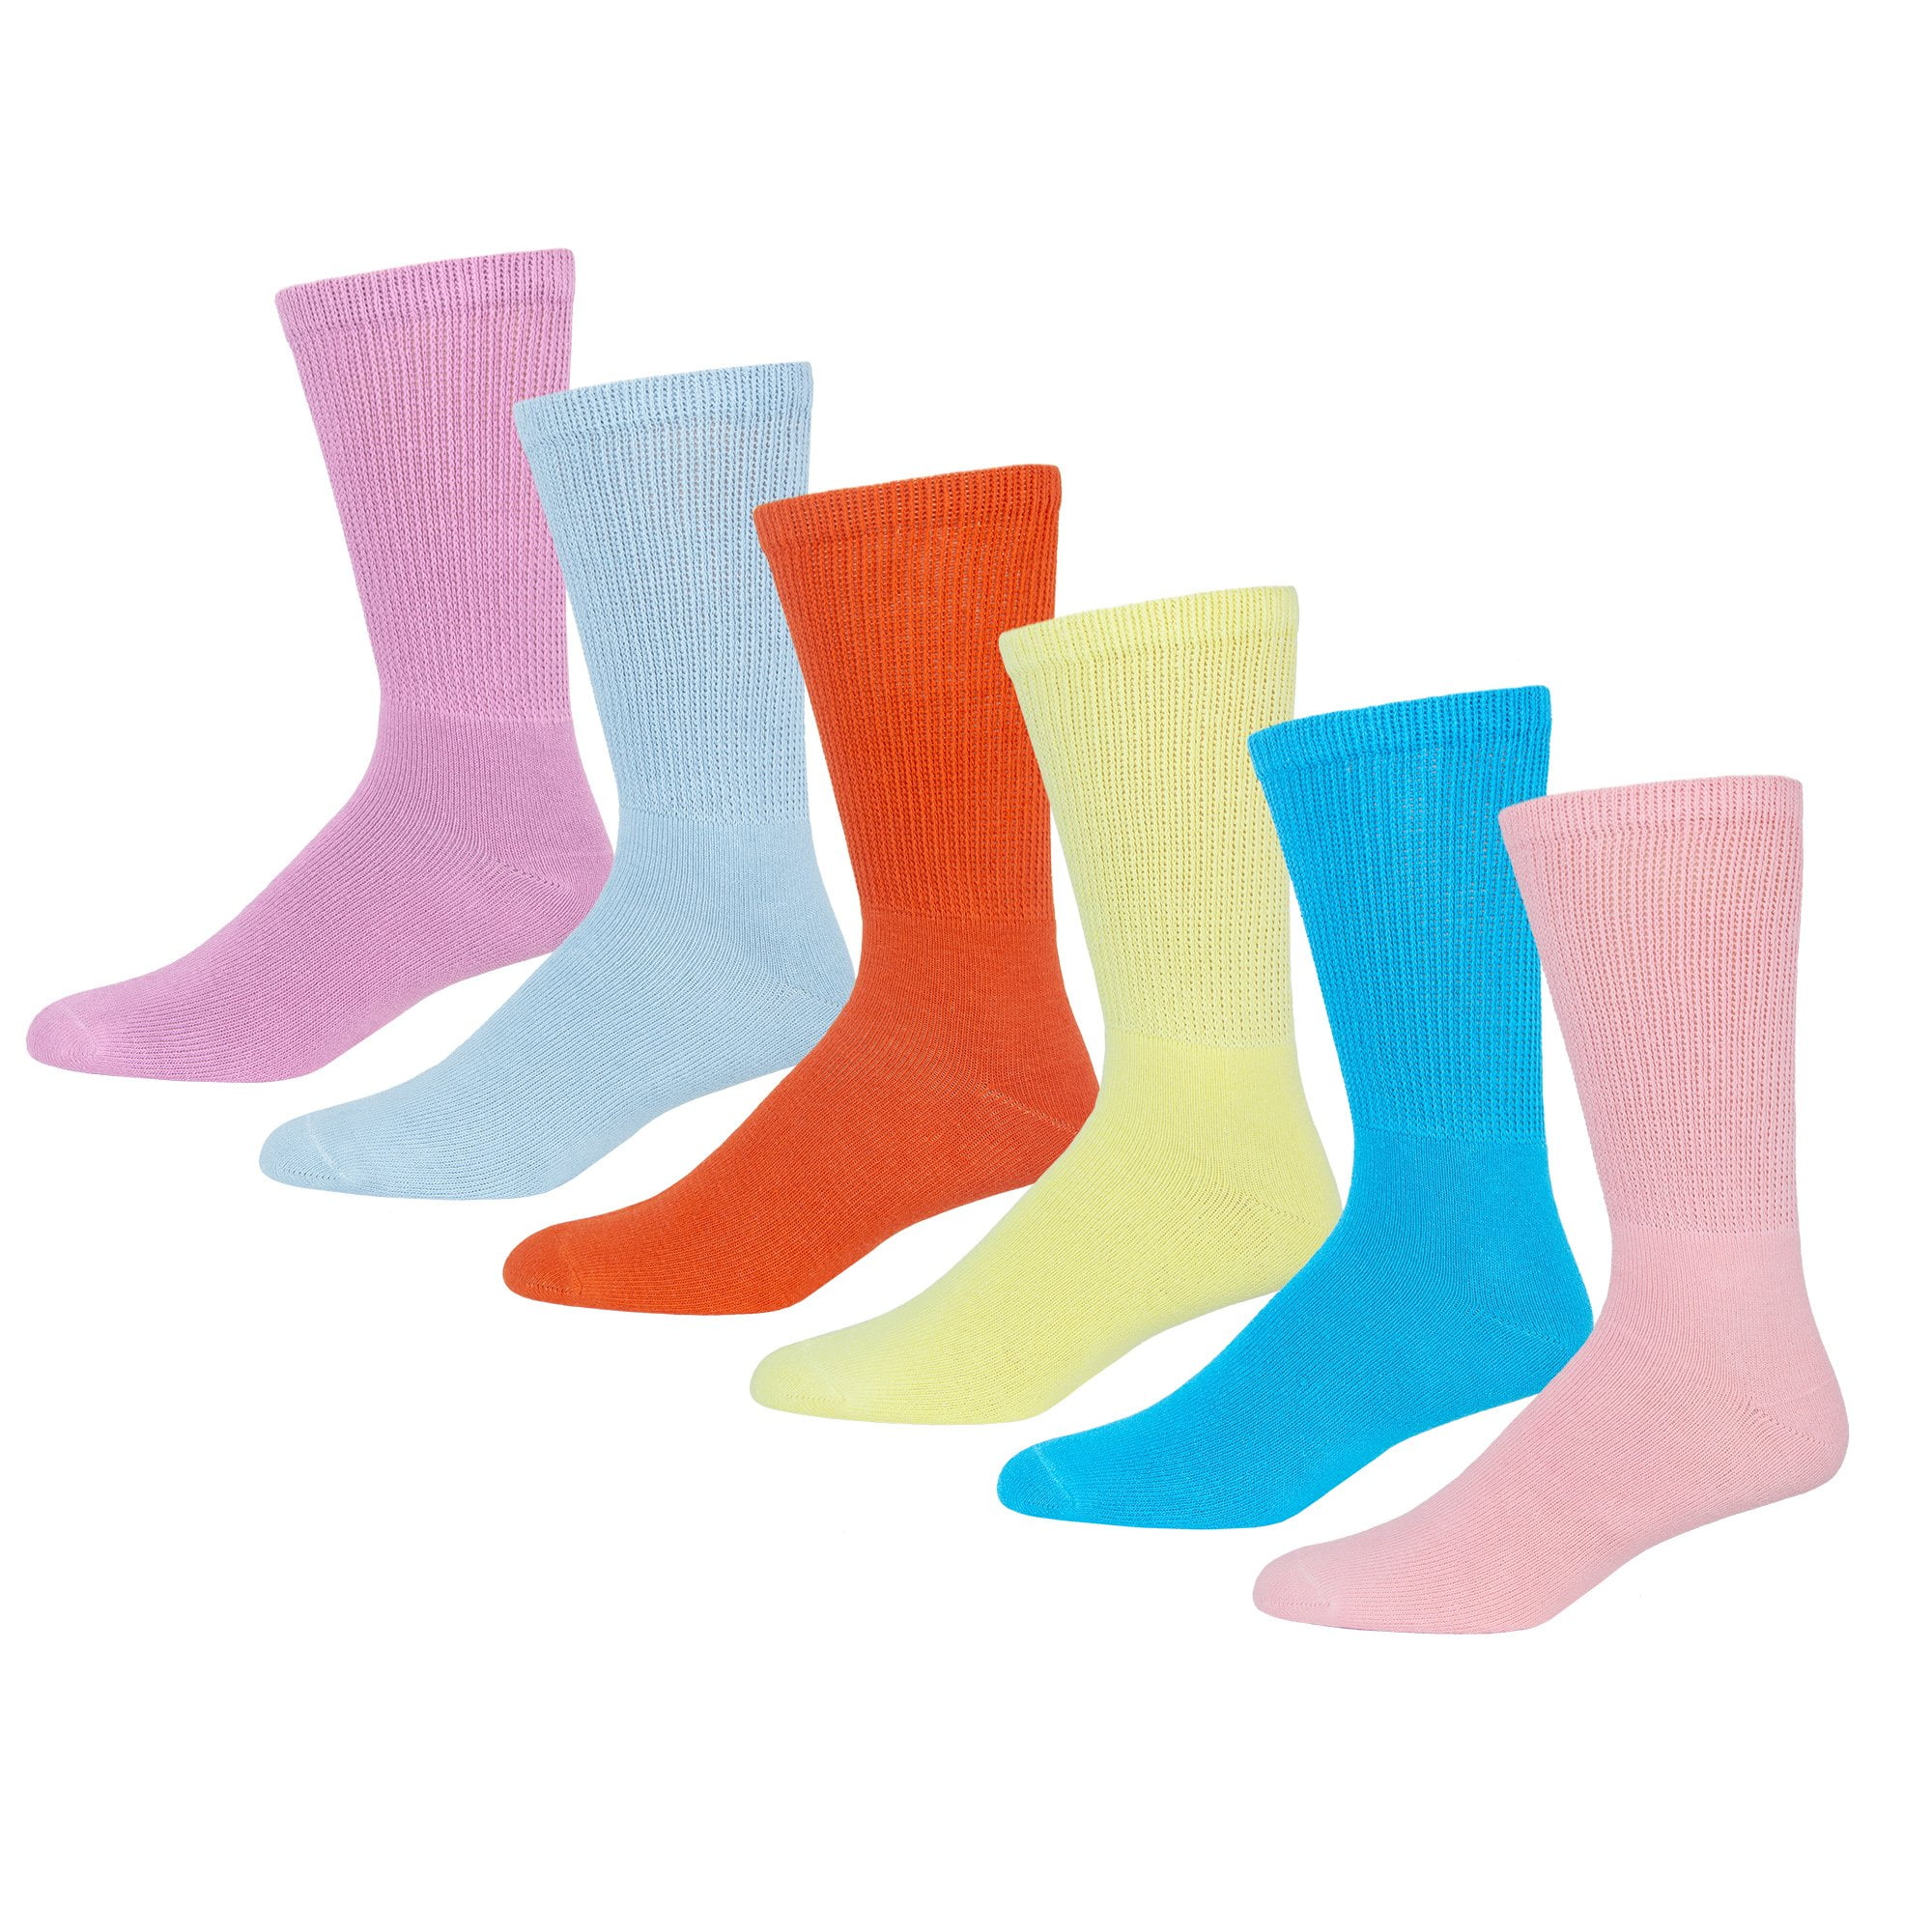 6 PACK Plain Pink Ankle Socks Size: 6-11 